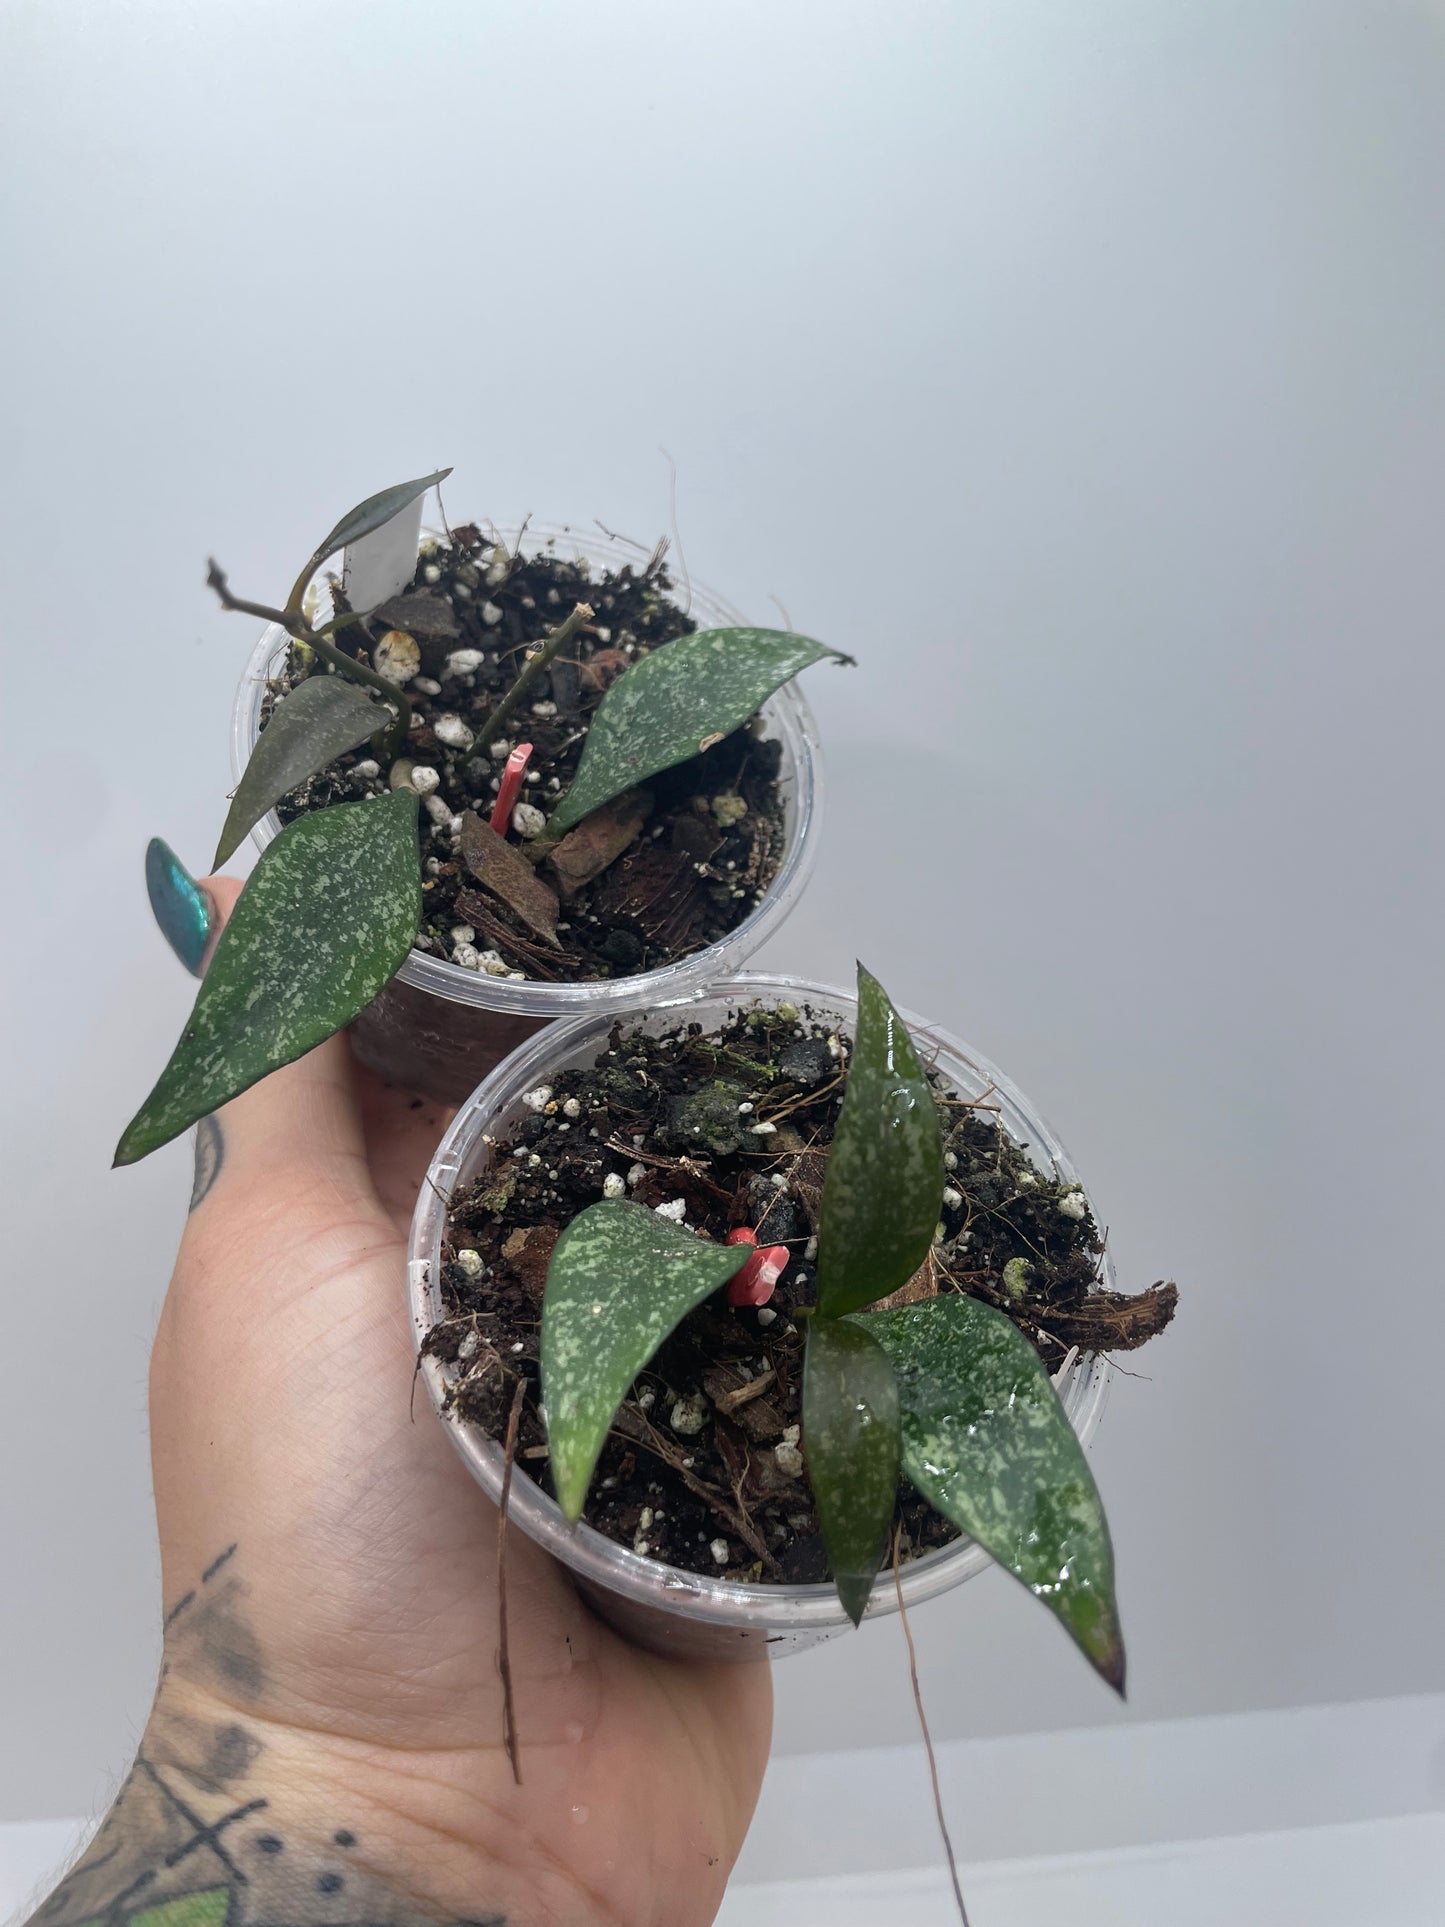 Hoya parviflora